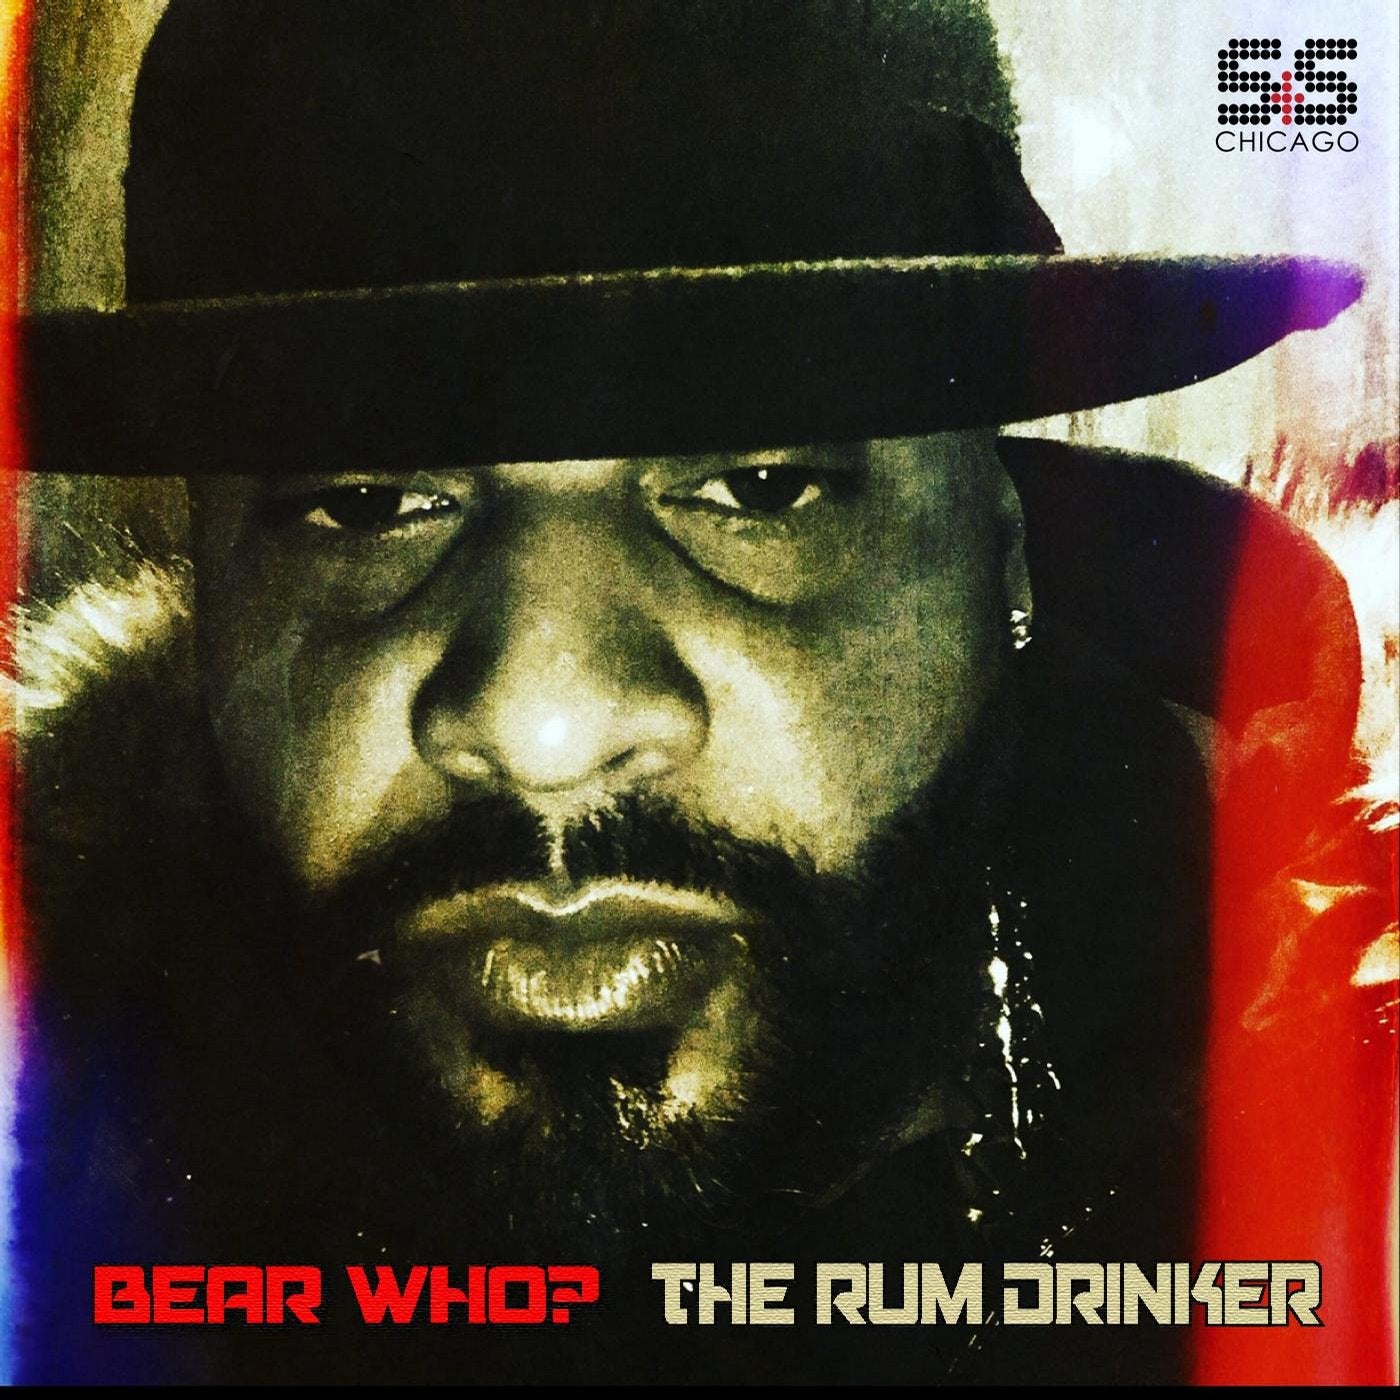 The Rum Drinker